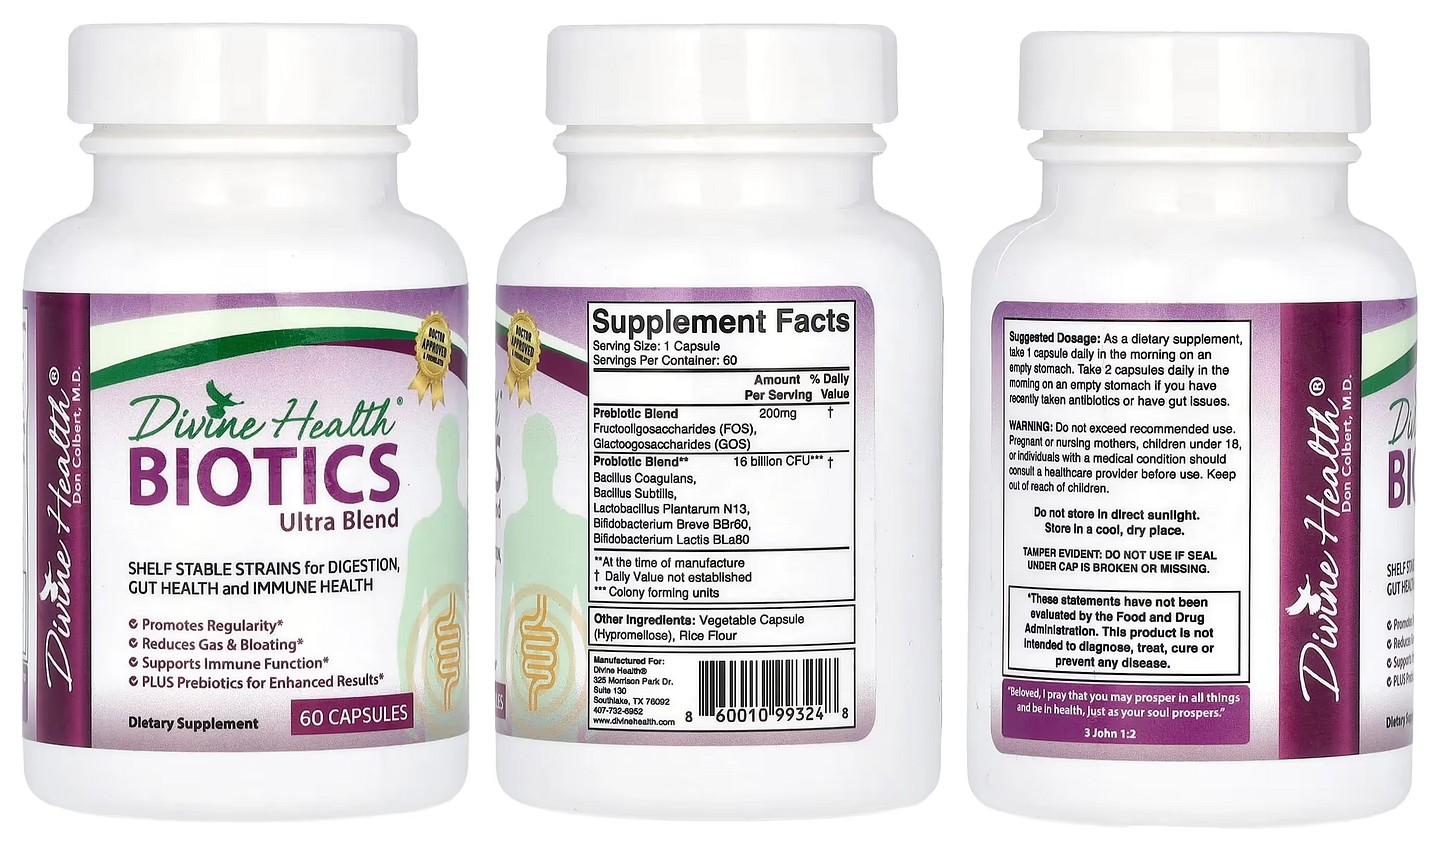 Divine Health, Biotics Ultra Blend packaging